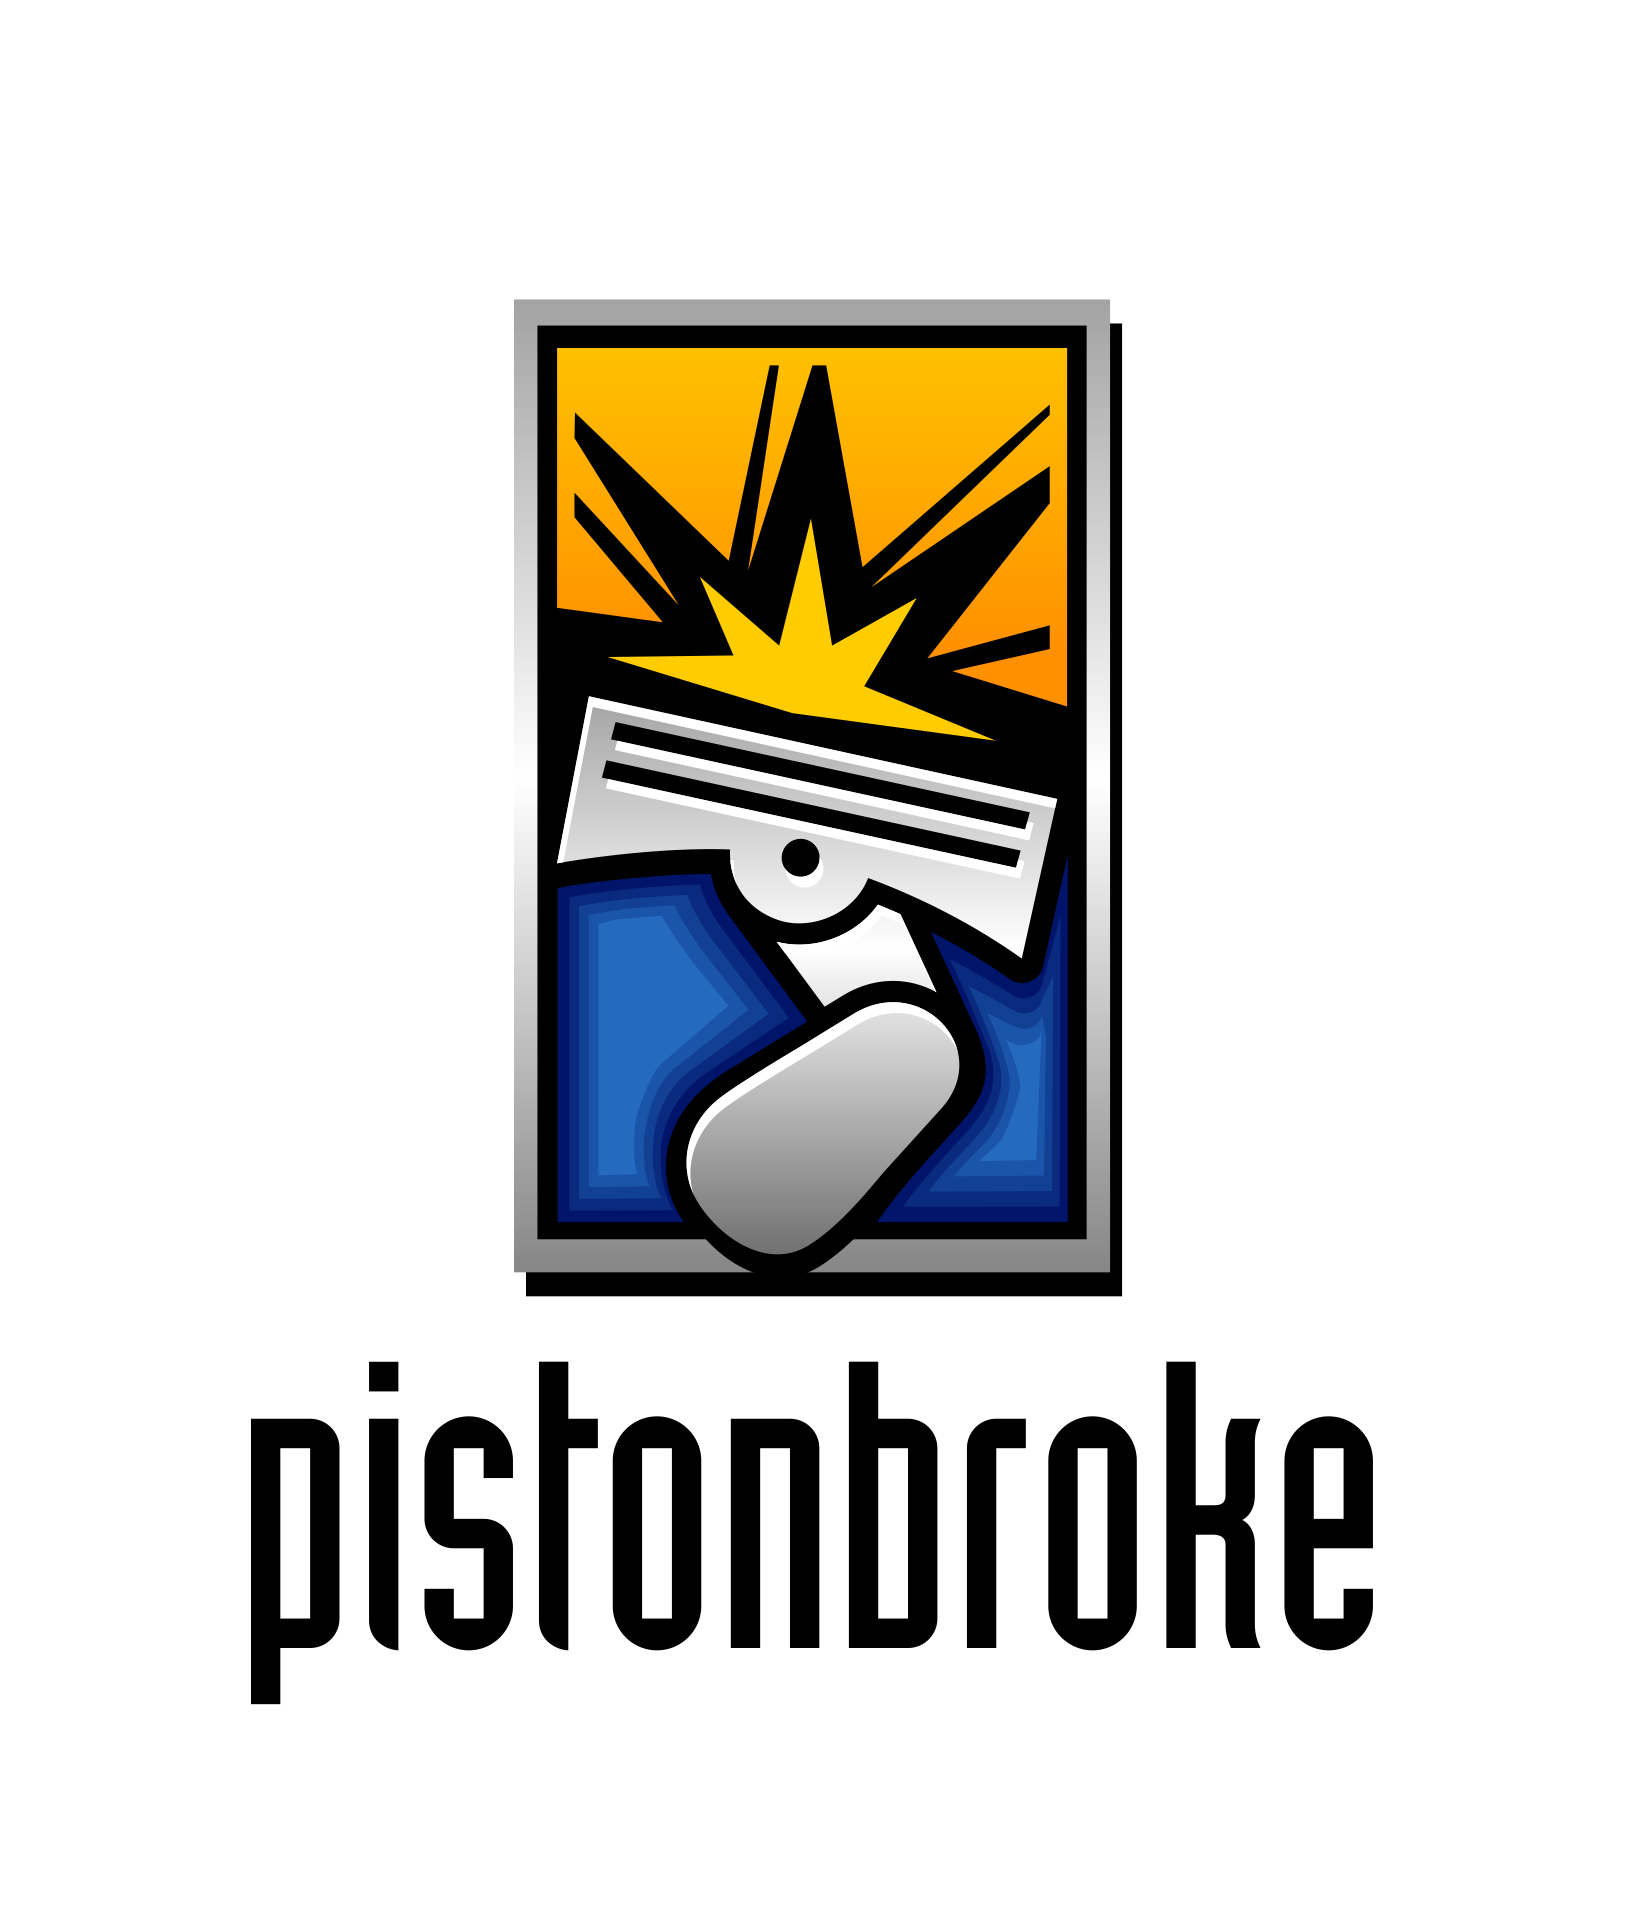 (c) Pistonbroke.com